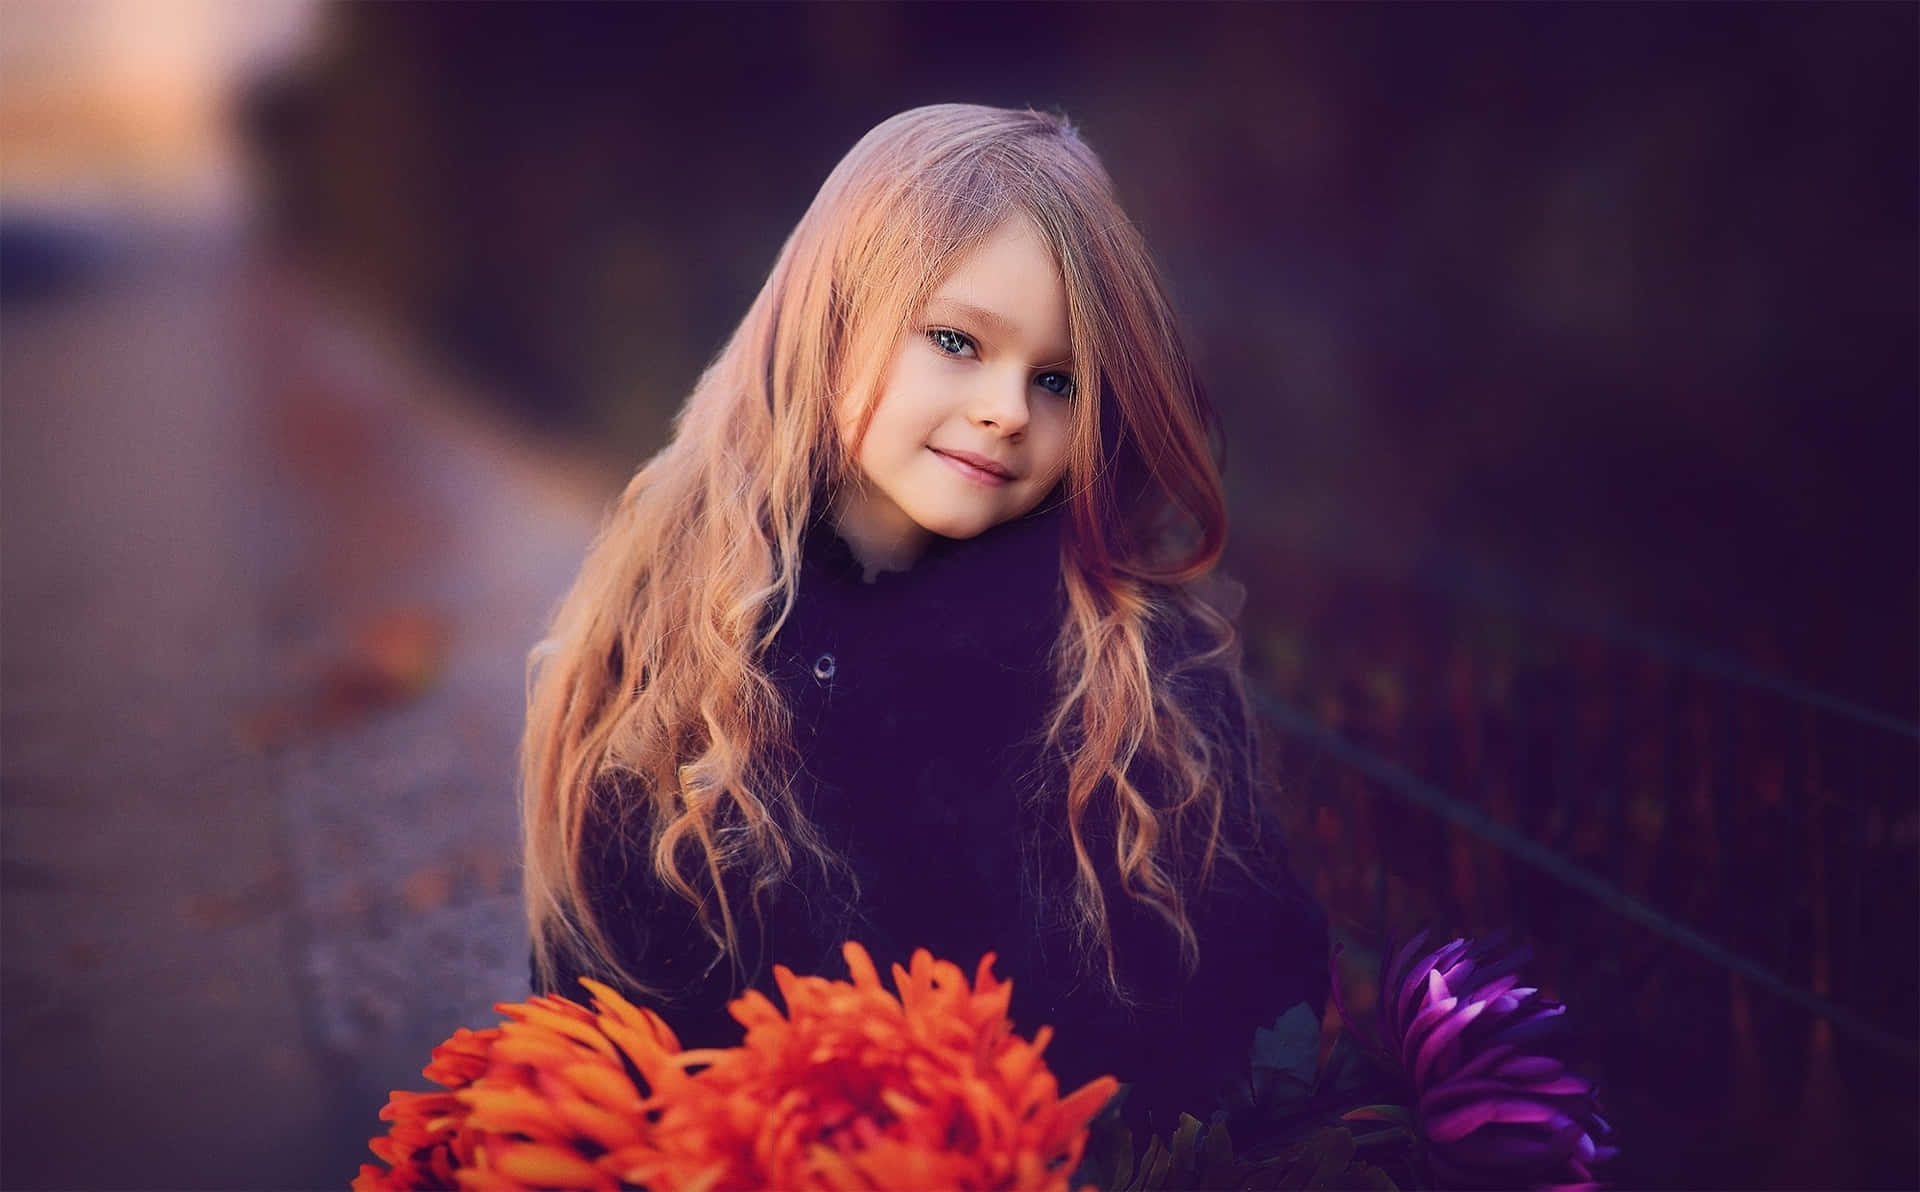 Autumn Portrait Little Girl With Flowers Wallpaper